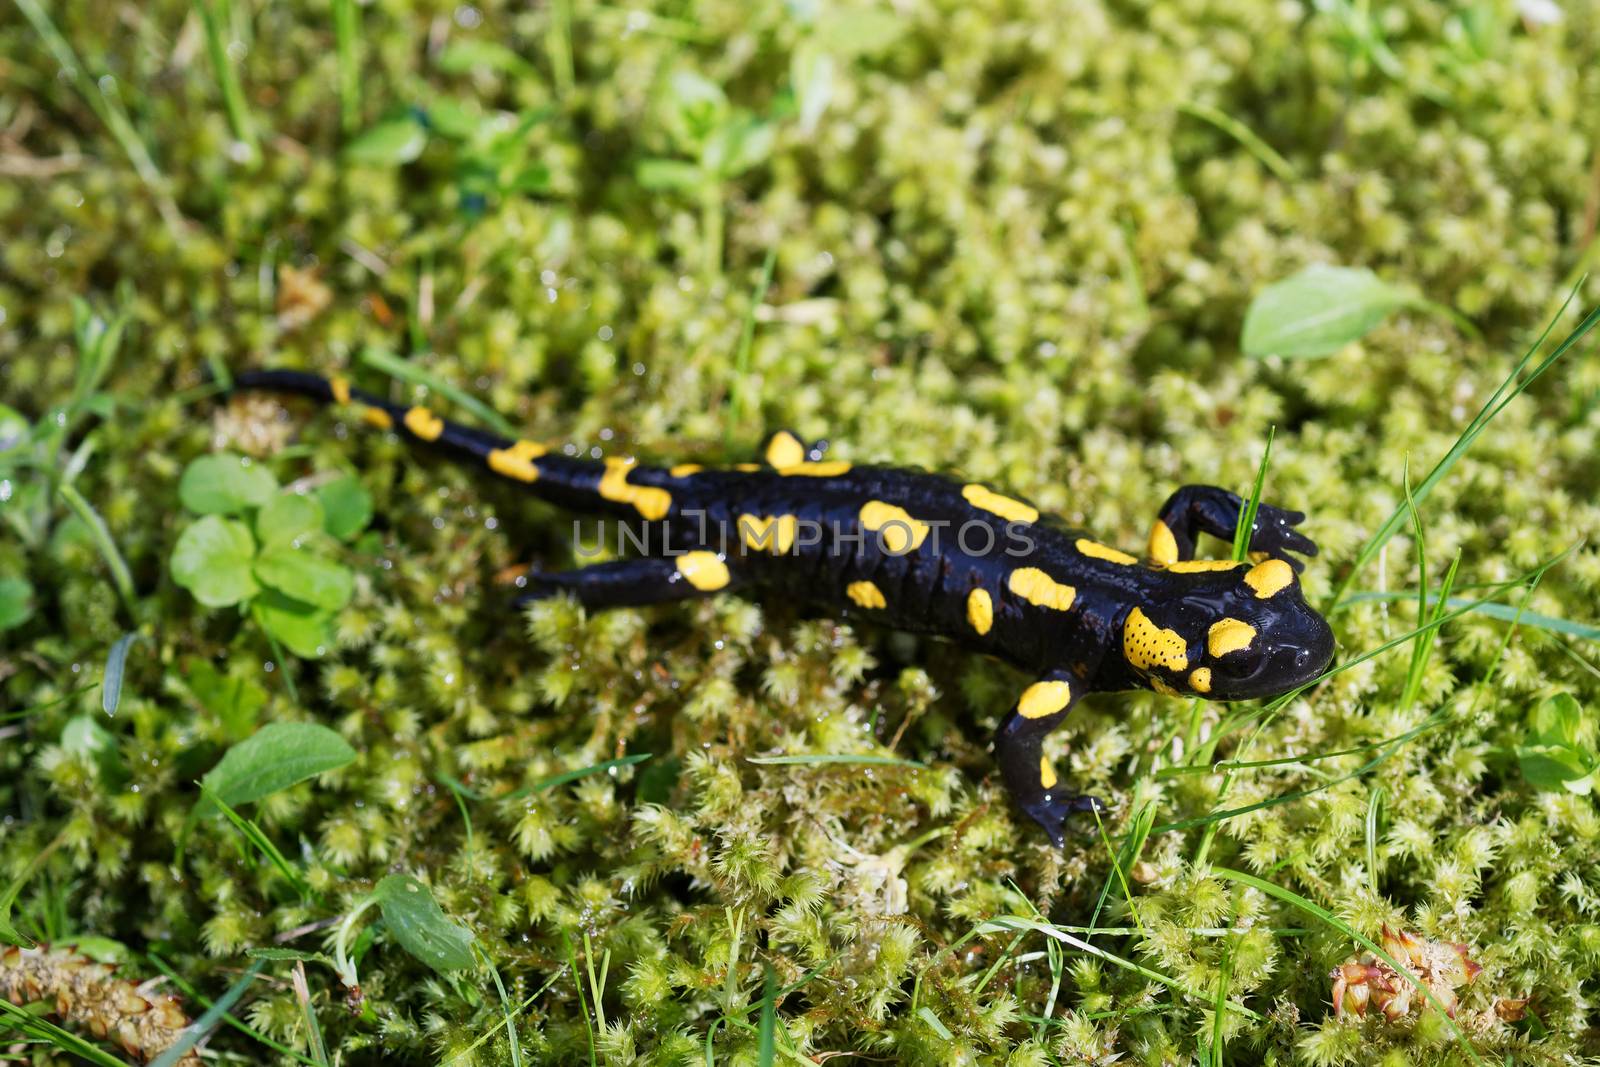 Fire salamander (Salamandra salamandra) in a wild nature